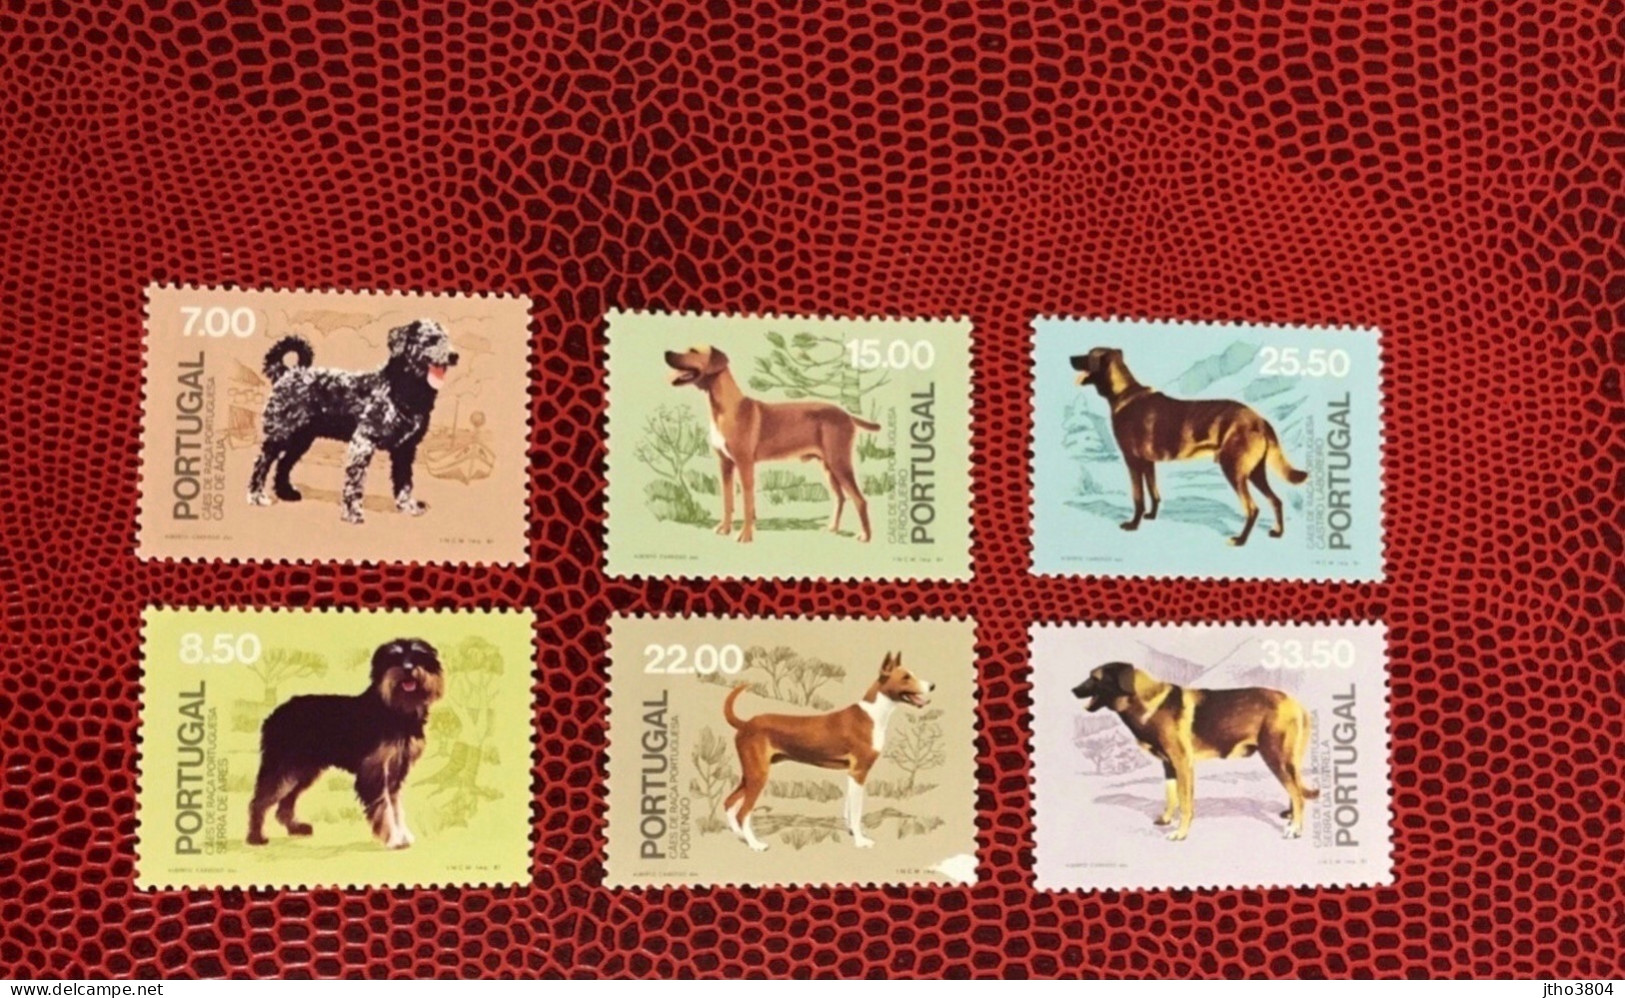 PORTUGAL 1980 6v Neuf MNH ** YT 1500 /05 Pets Cane Chien Dog Perro Hund - Honden